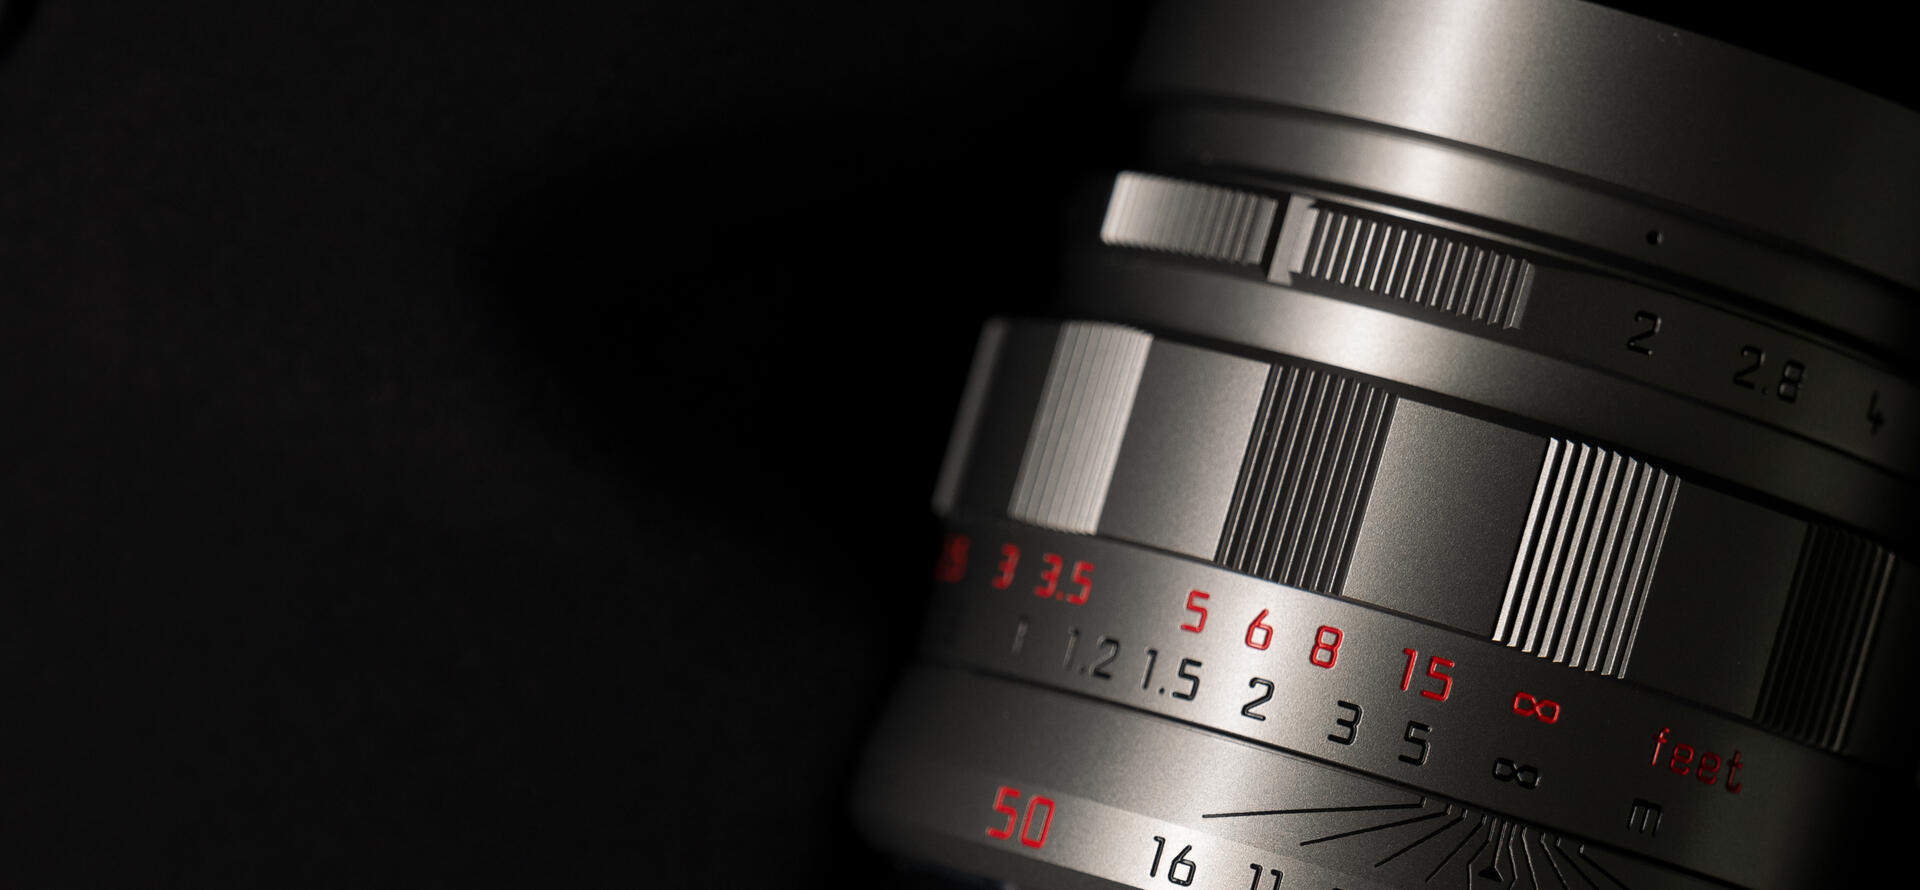 Leica M-A Titan - Overview | Leica Camera JP